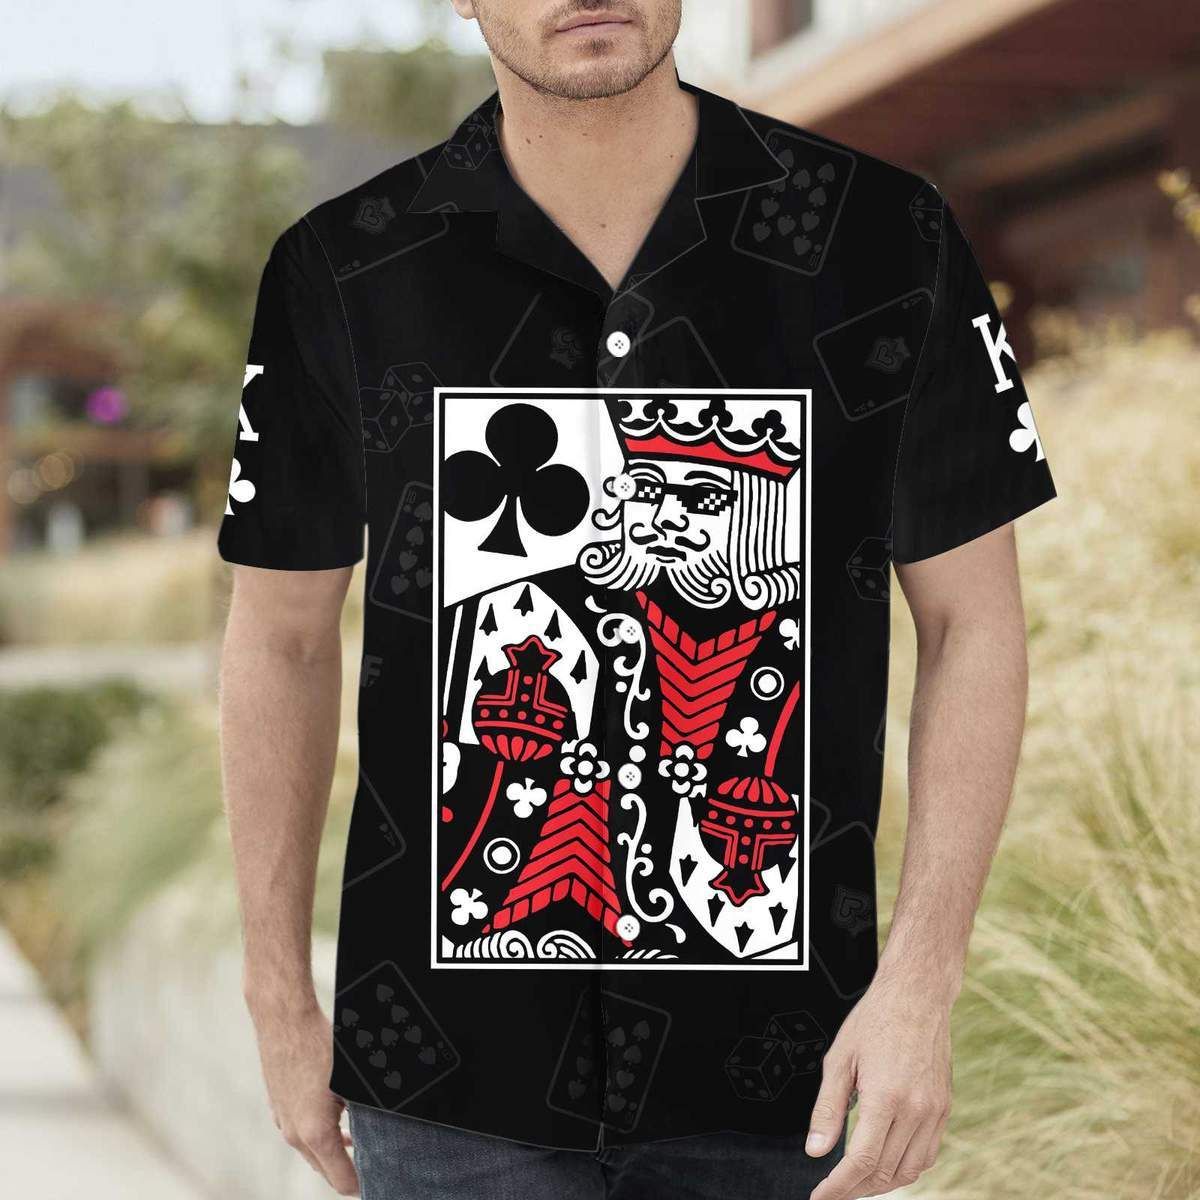 King Card Poker is a game of chance Hawaiian Shirt #V